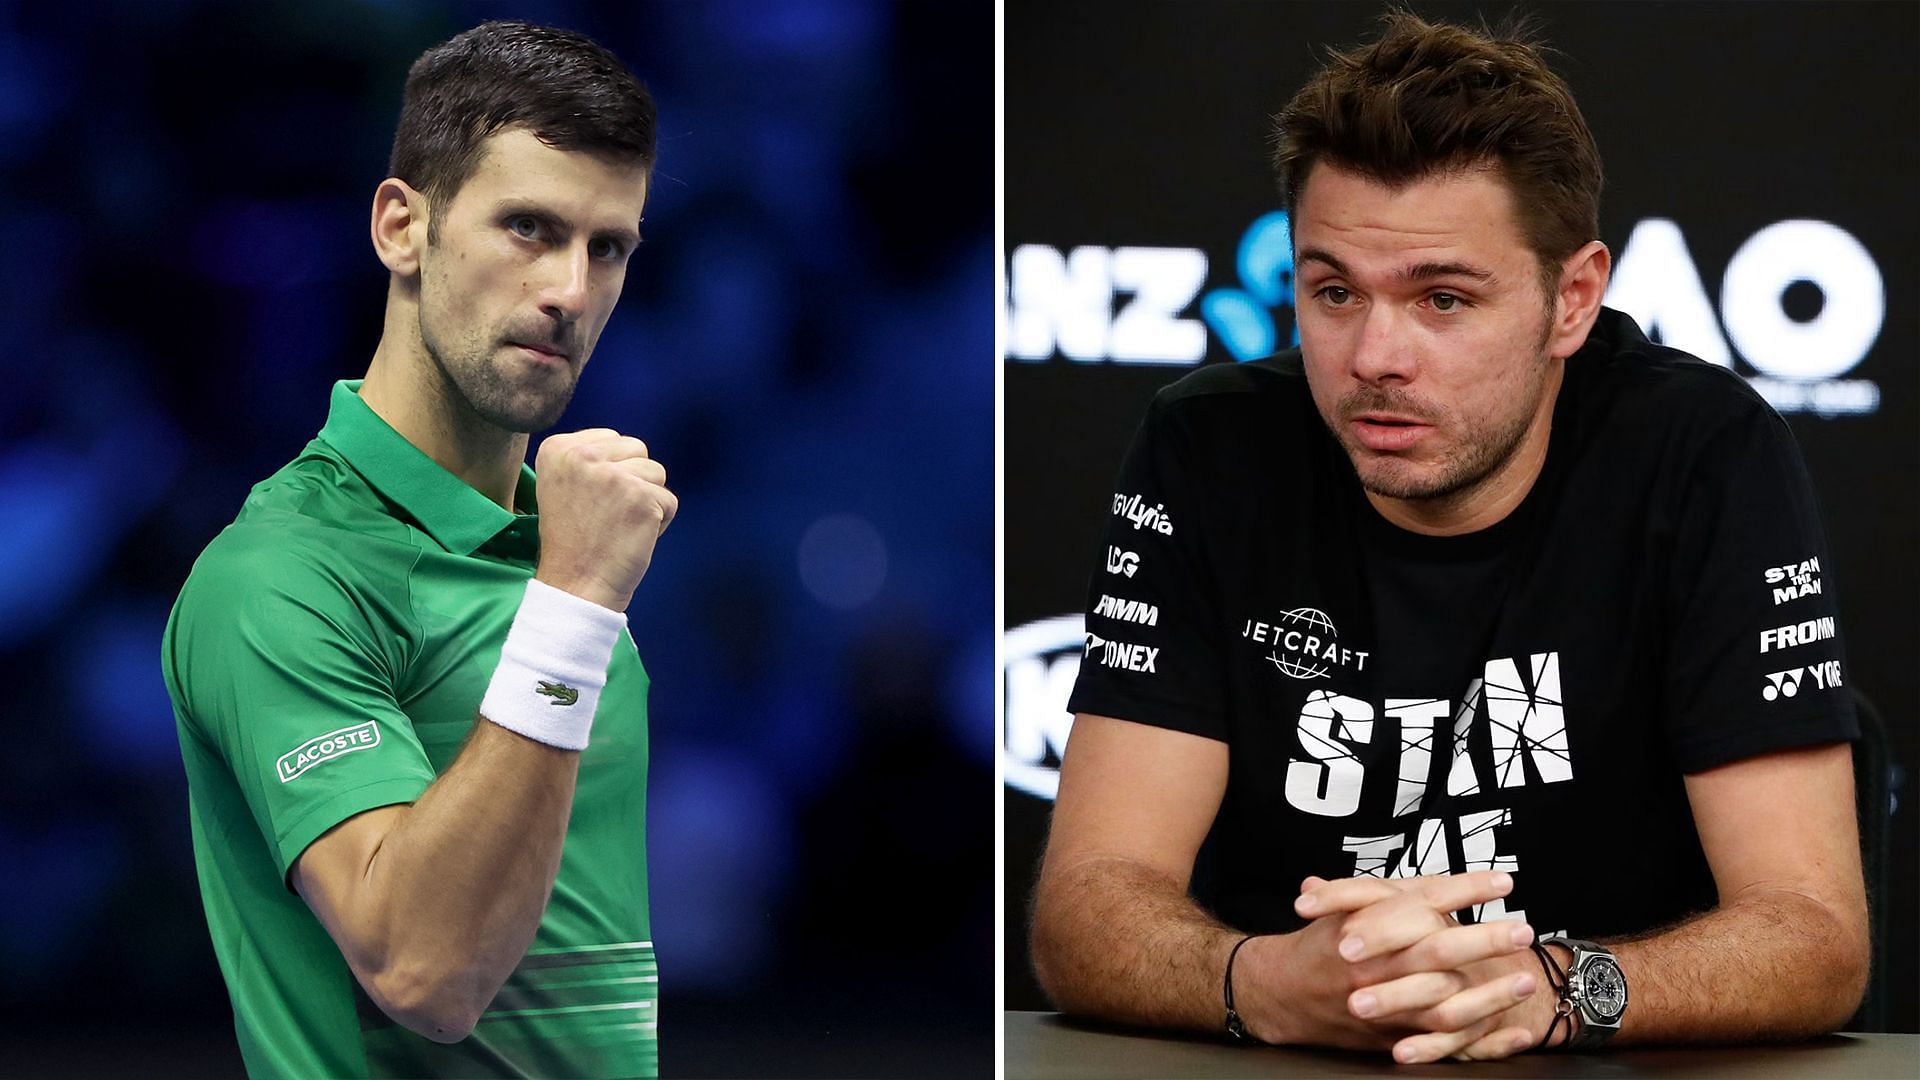 Stan Wawrinka discusses contenders who can challenge Novak Djokovic